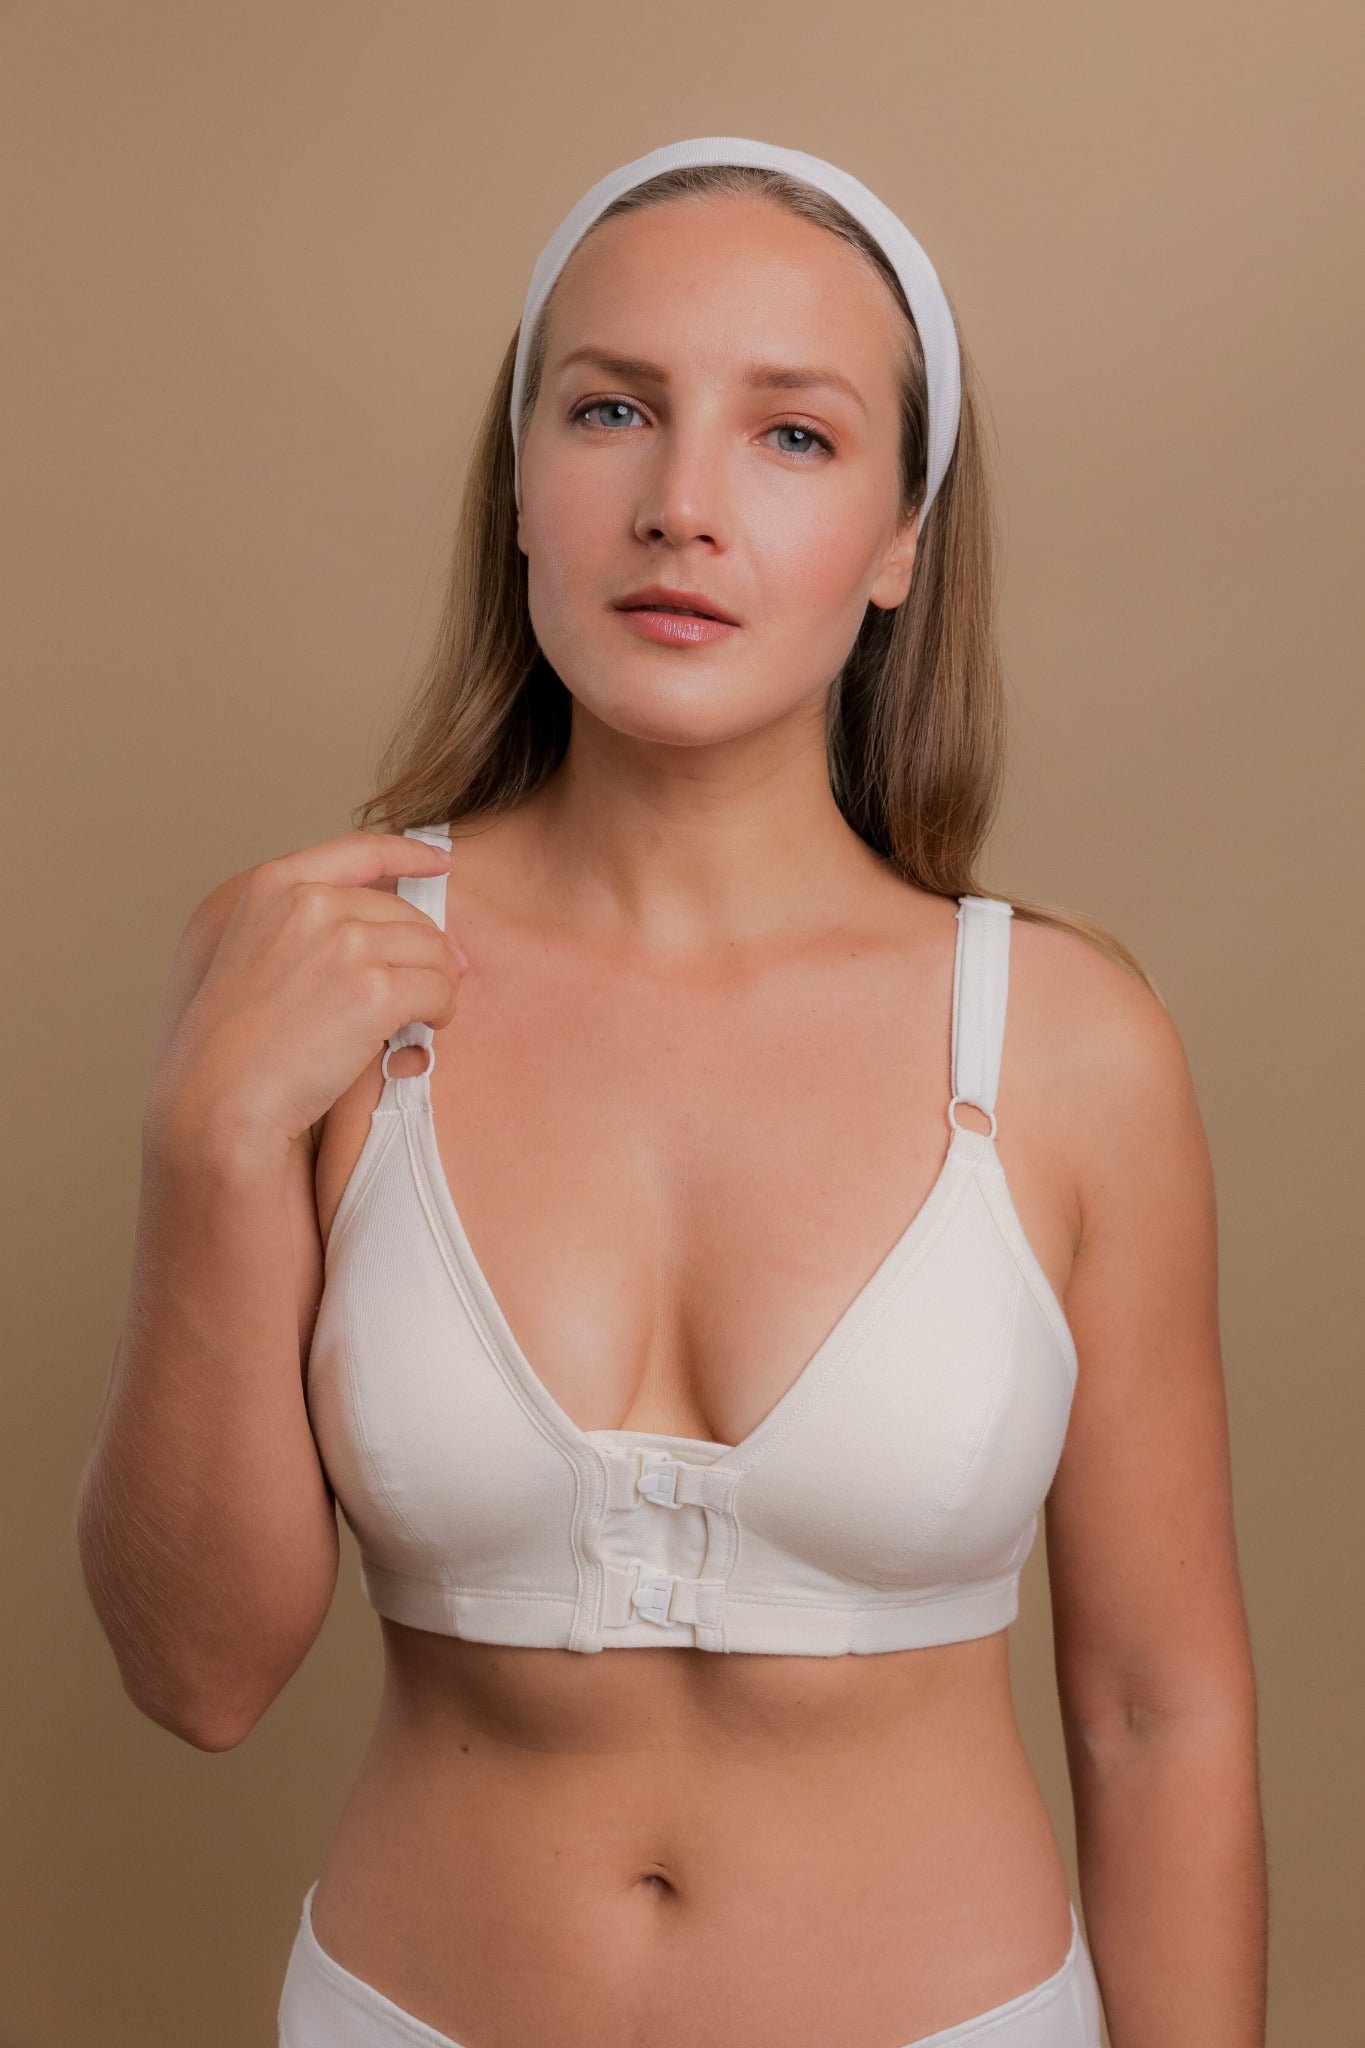  ANTIY Women's Cotton Front Closure Mastectomy Bras